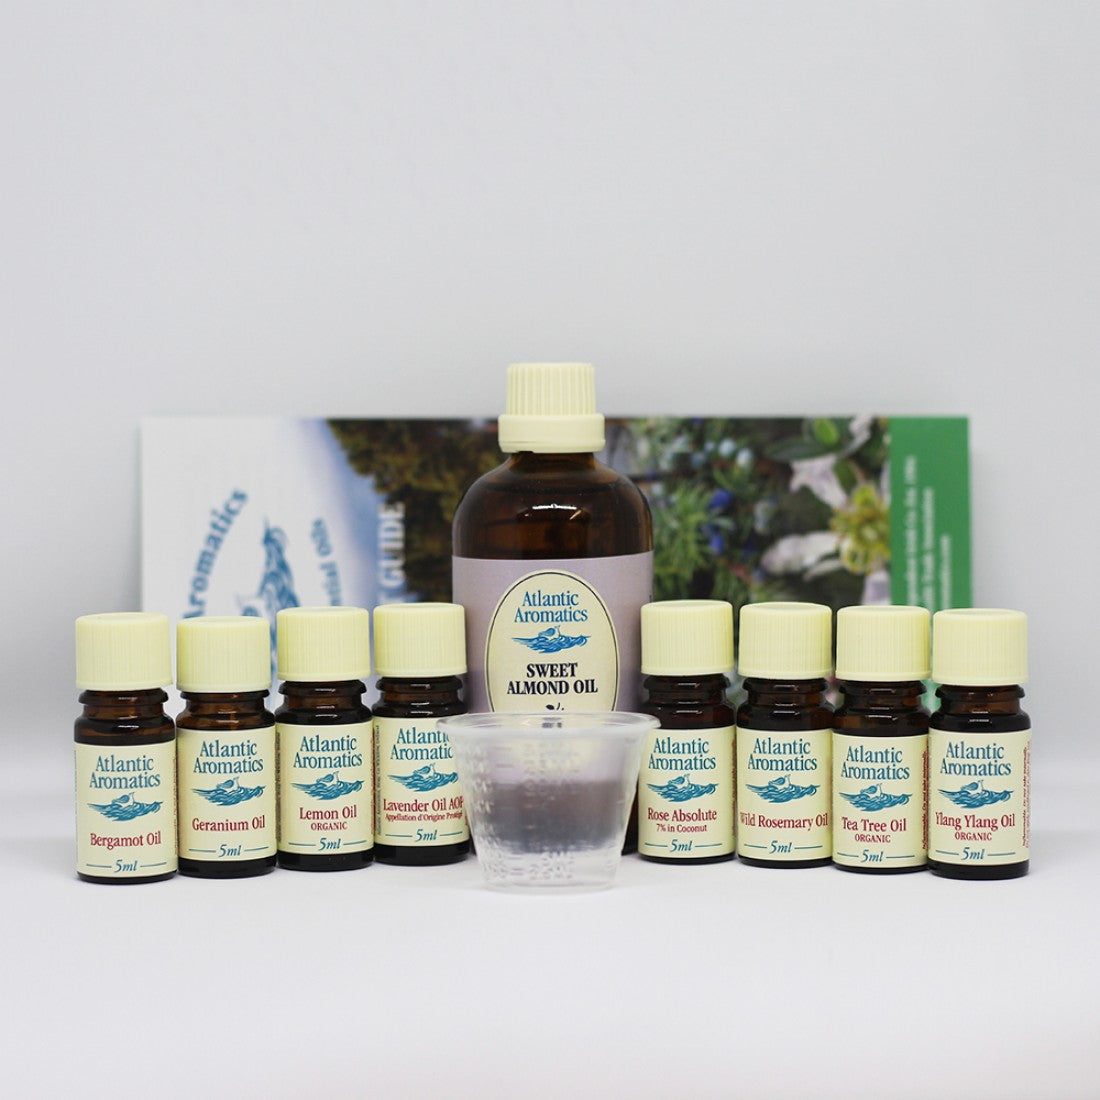 Atlantic Aromatics Aromatherapy Starter Kit